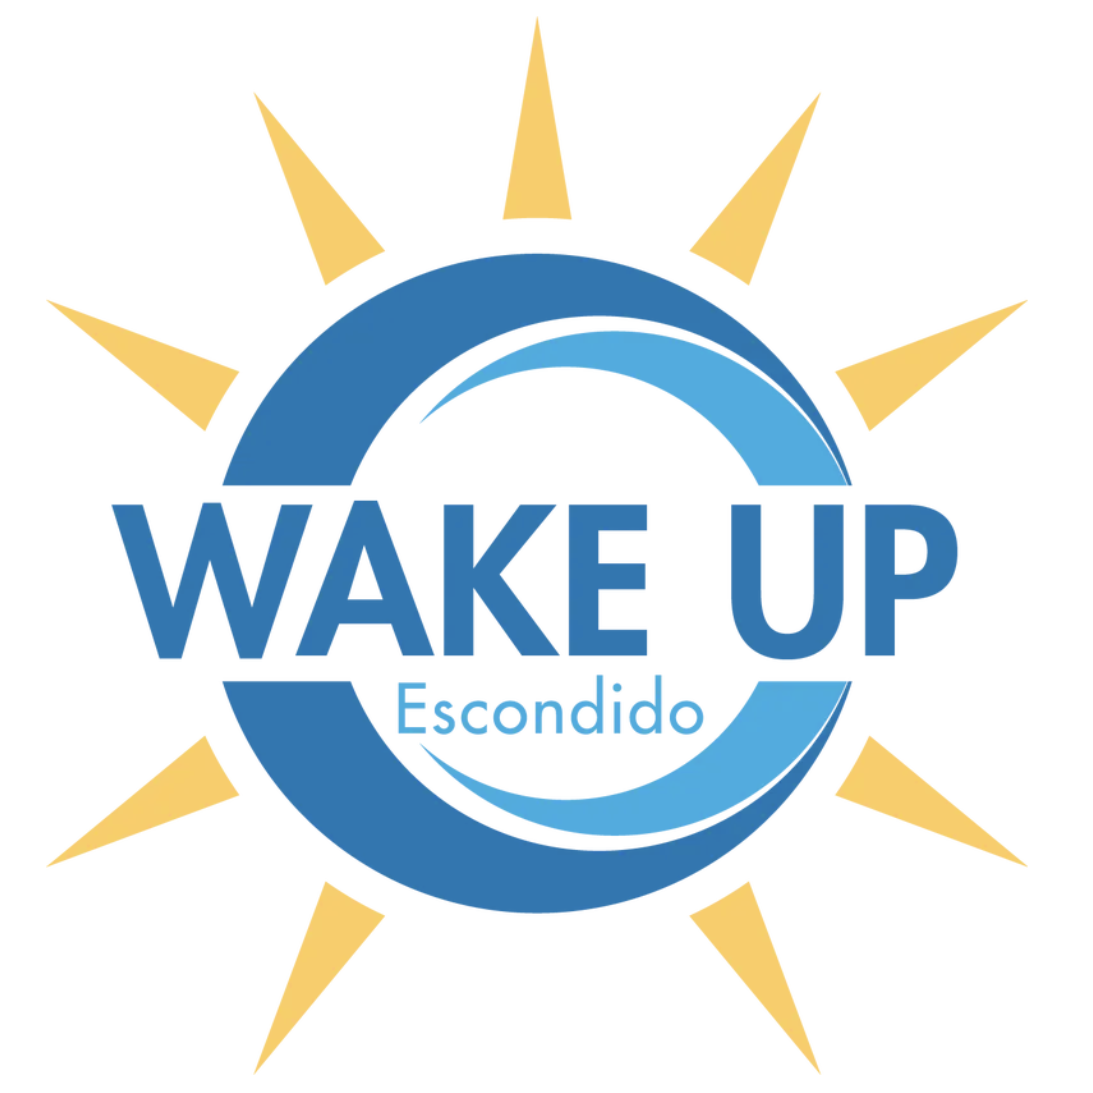 Wake Up Escondido